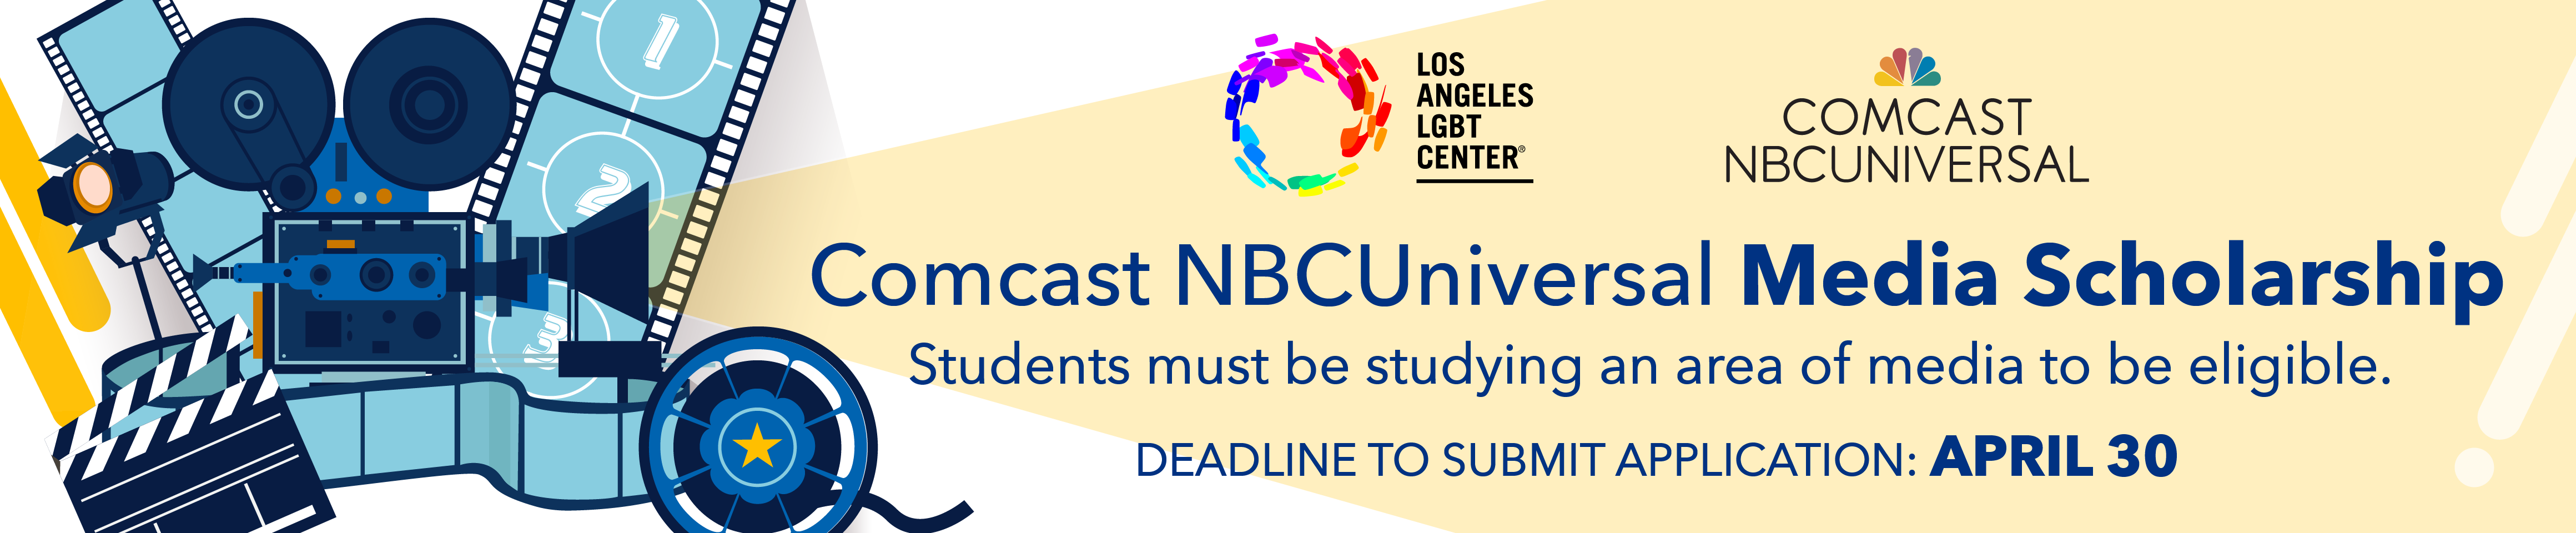 Comcast NBCUniversal Media Scholarship 
Deadline: April 30, 2022